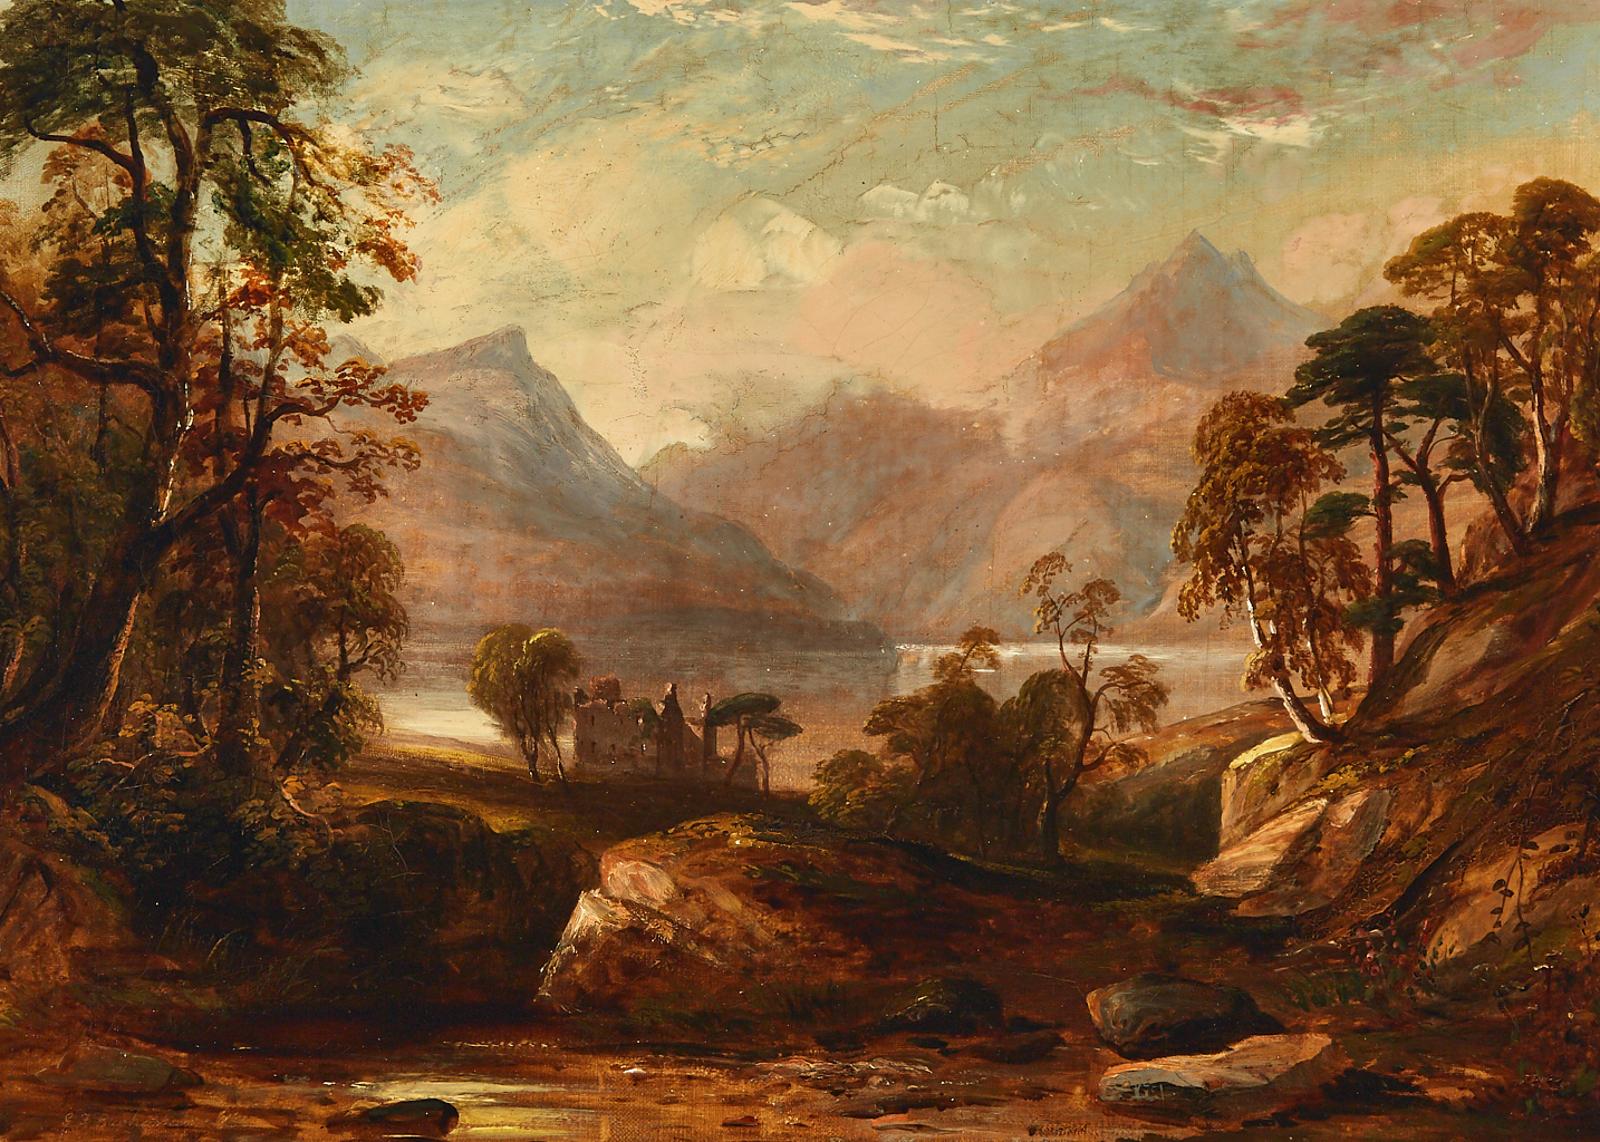 George F. Buchanan (1800-1864) - A Highland Solitude - Sunset, 1850